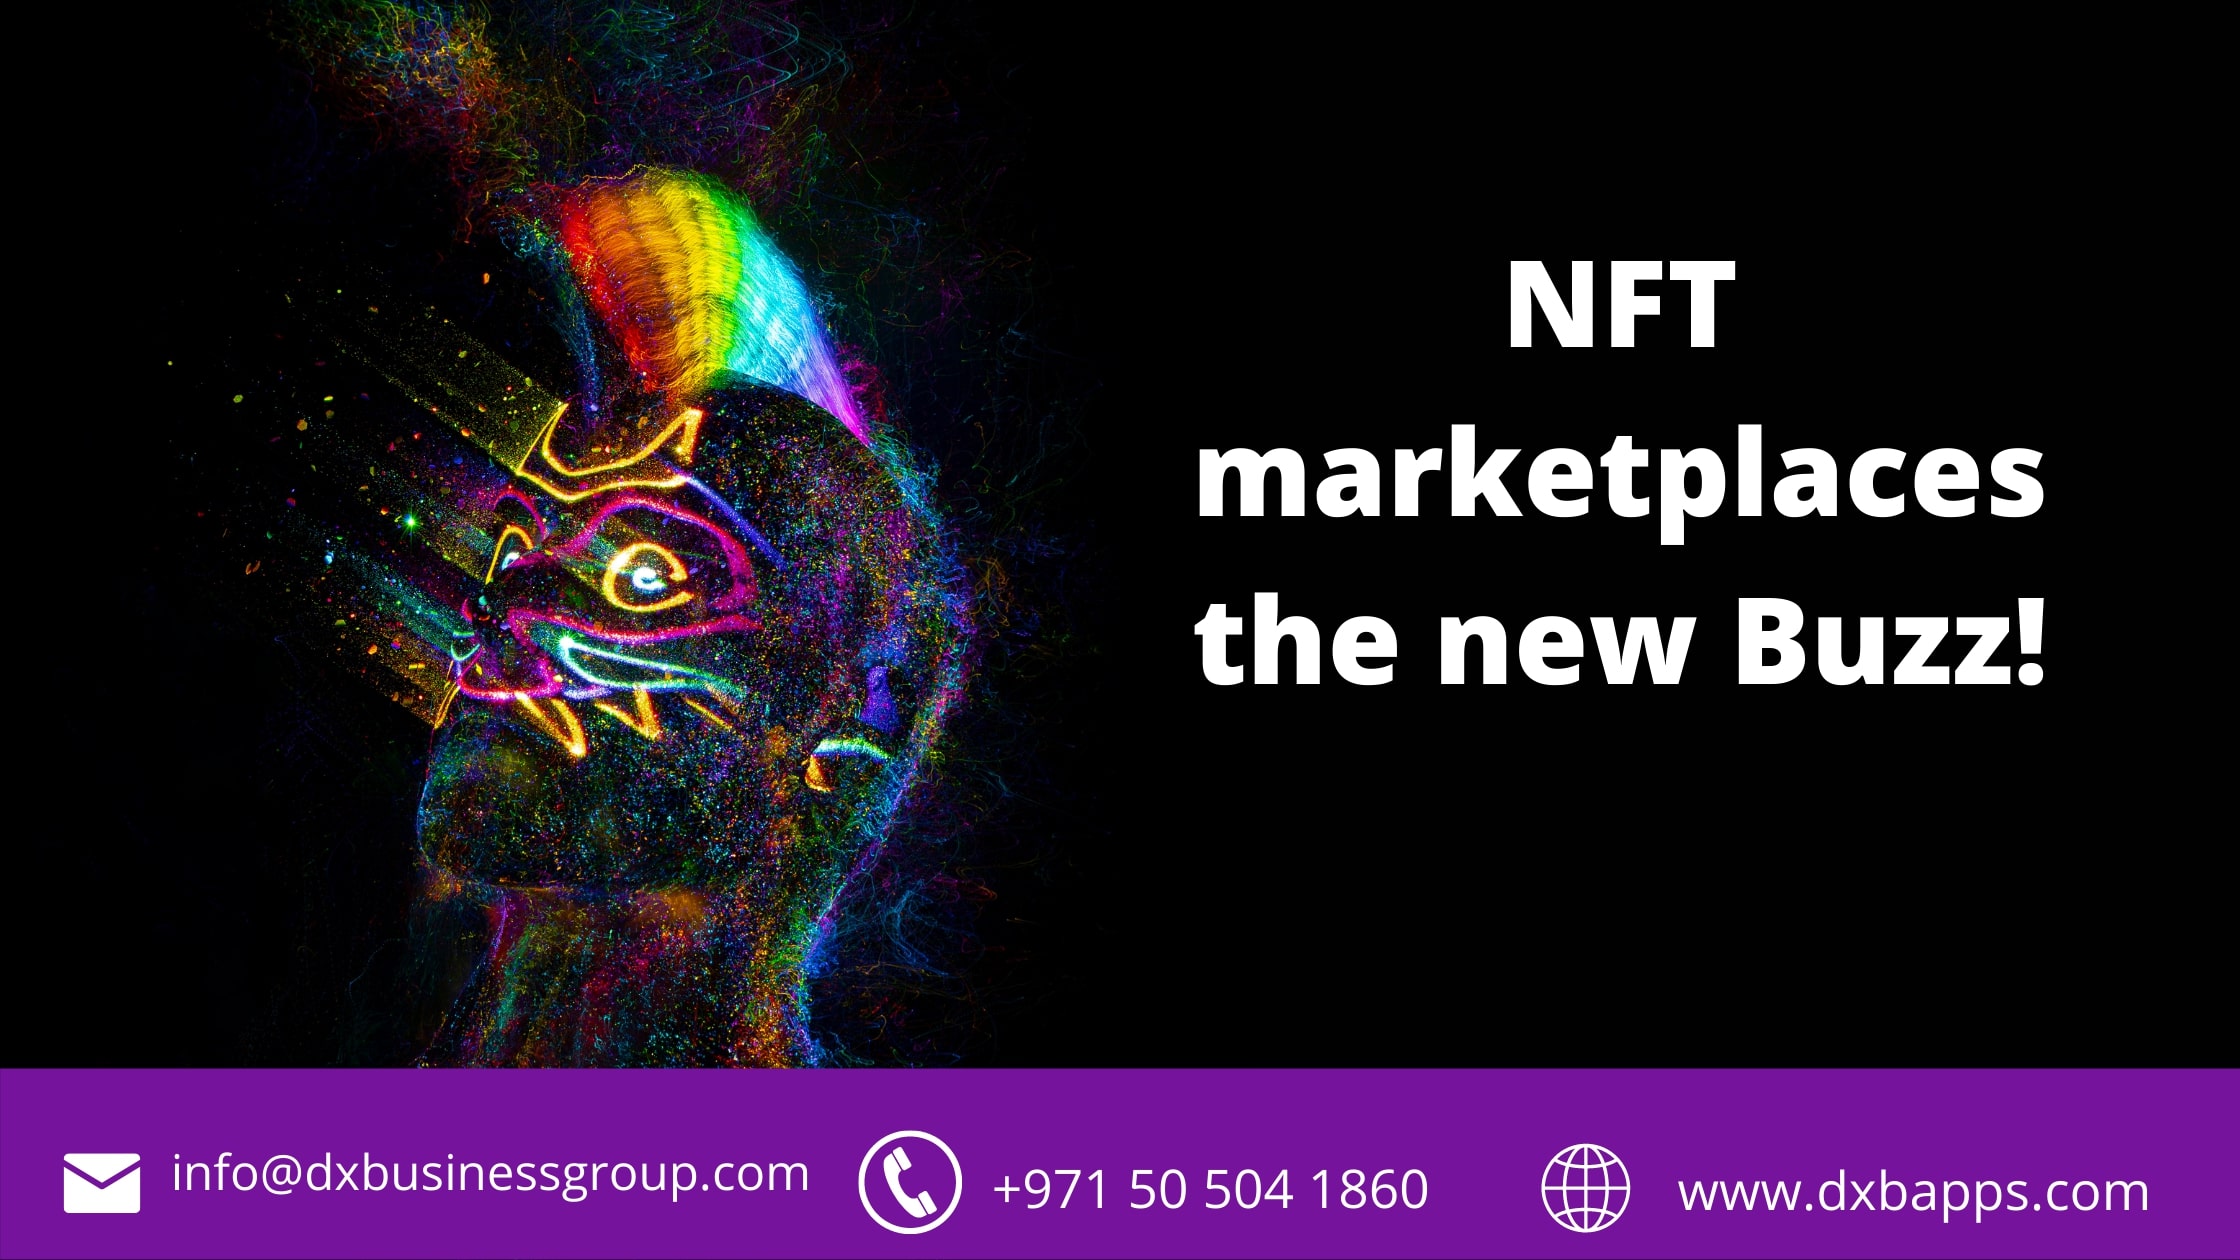 NFT marketplaces the new Buzz!